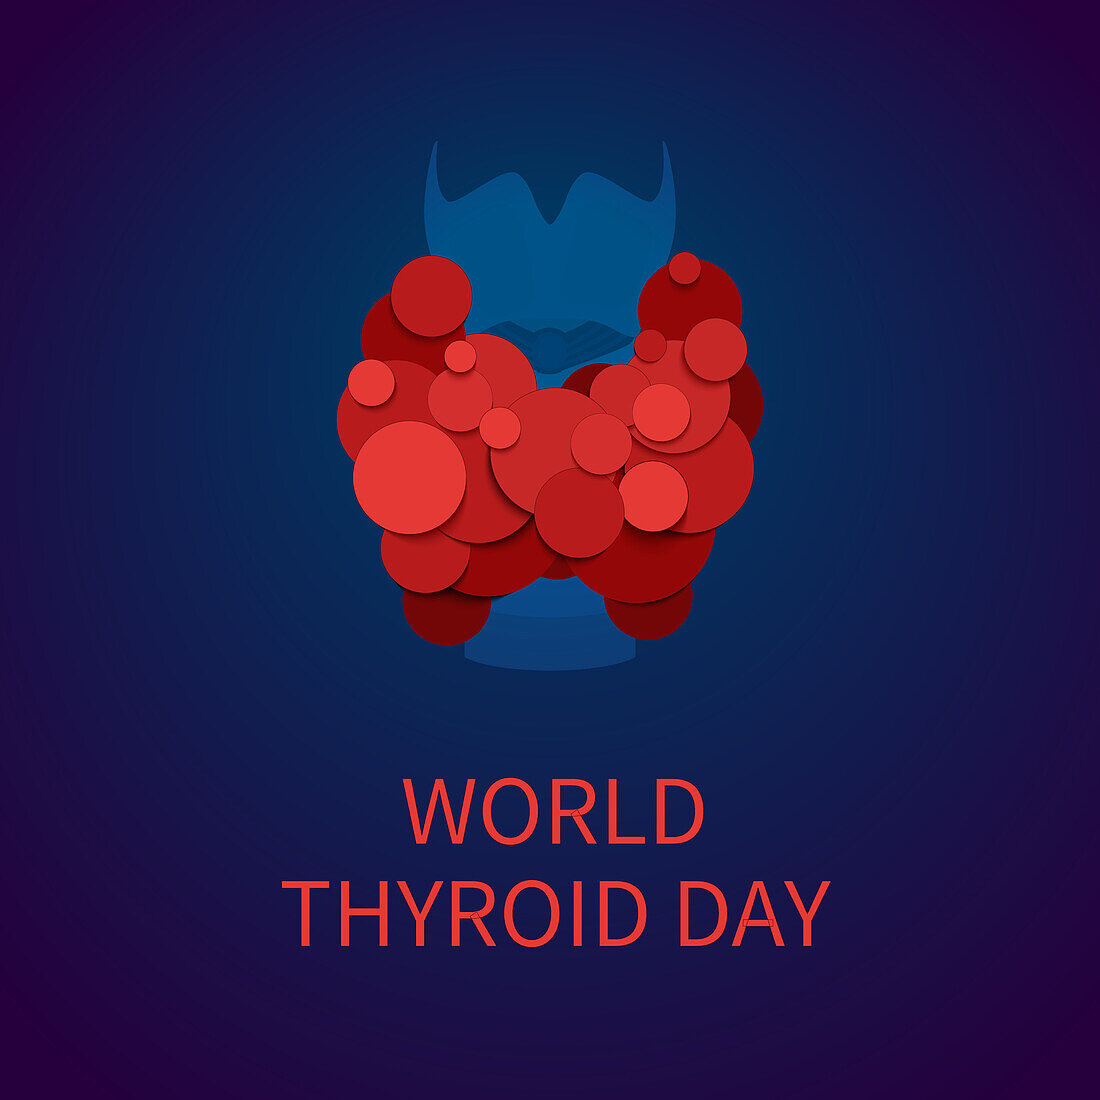 Thyroid gland, conceptual illustration